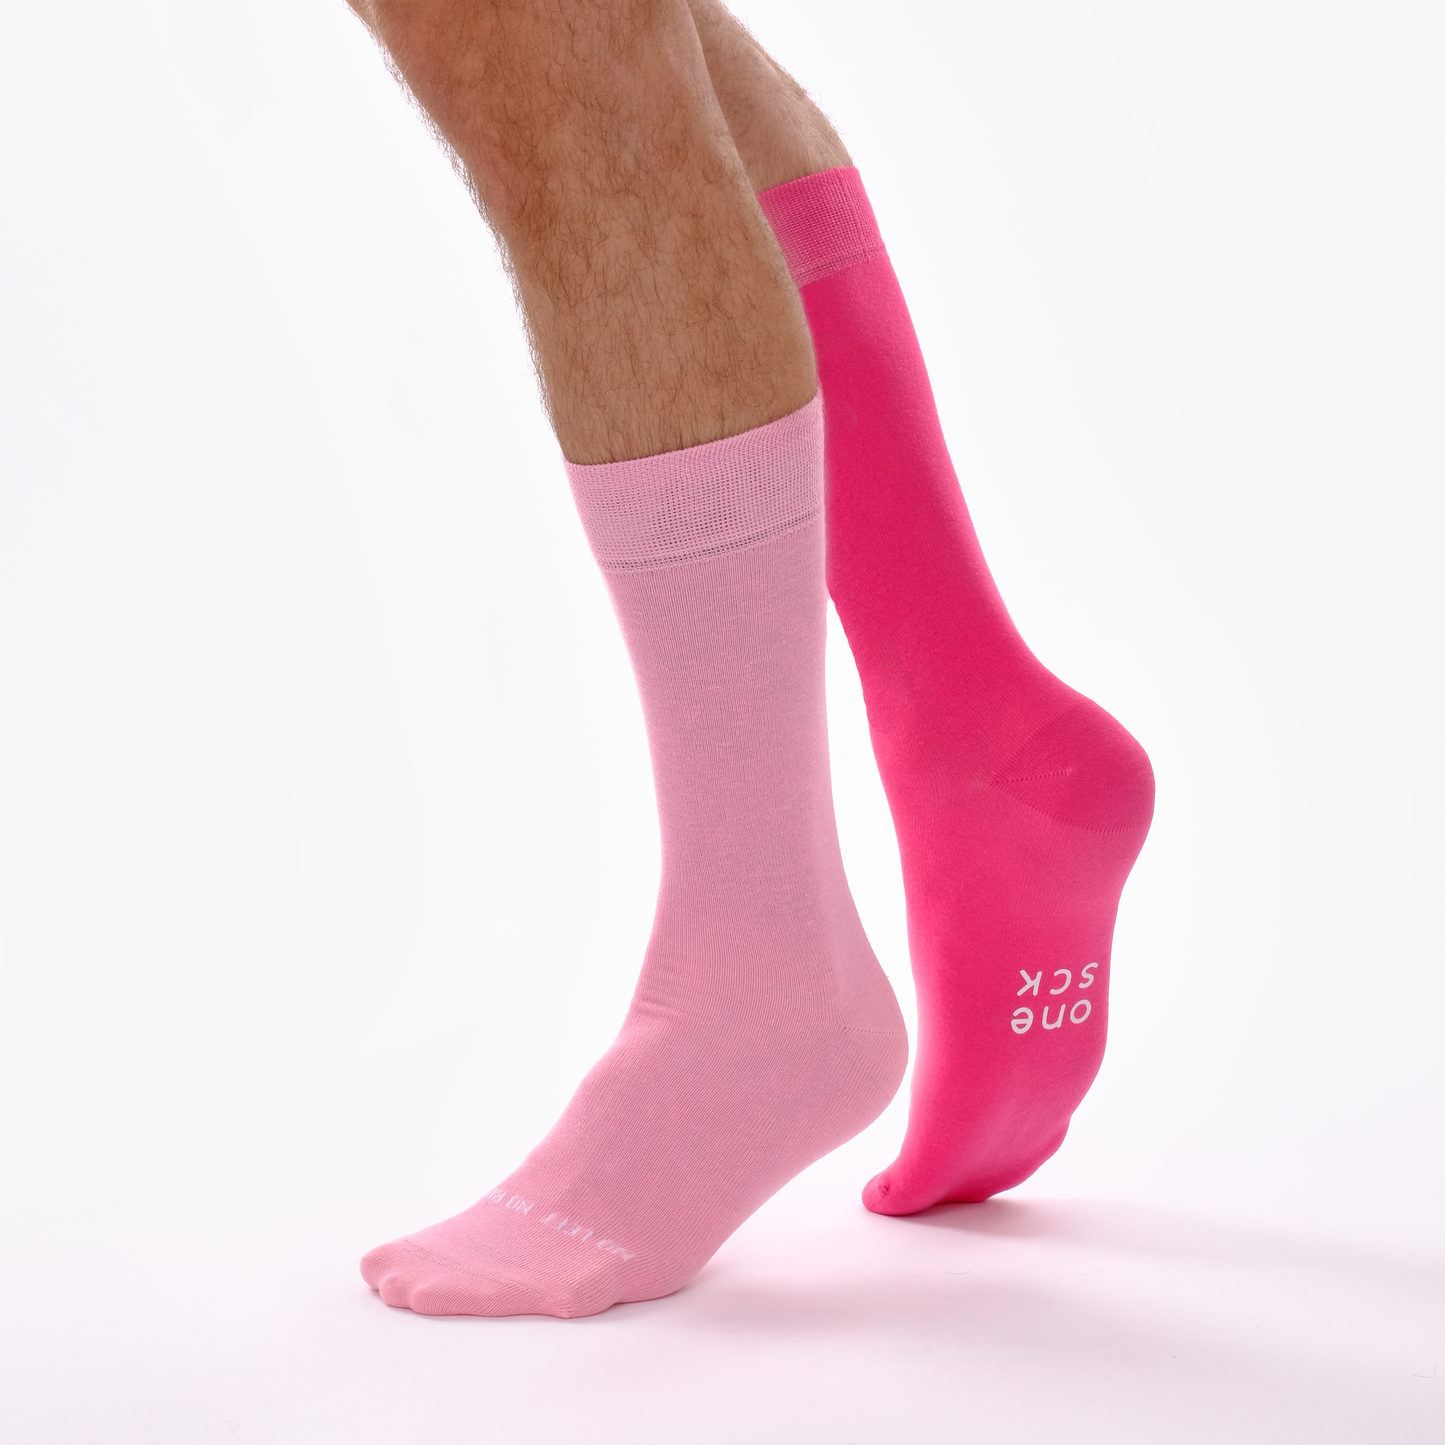 Hot Pink & Candy Pink Odd Socks